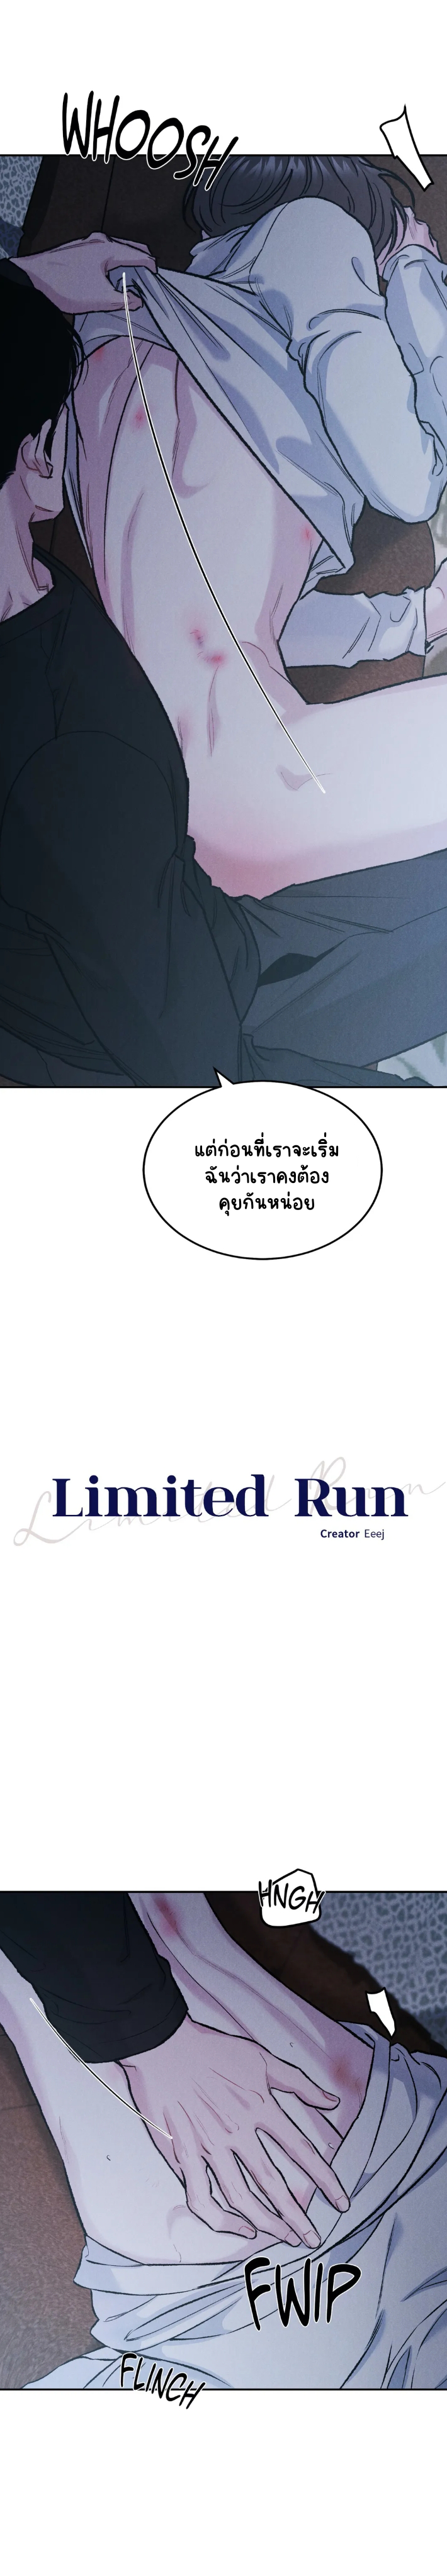 Limited Run 28-3